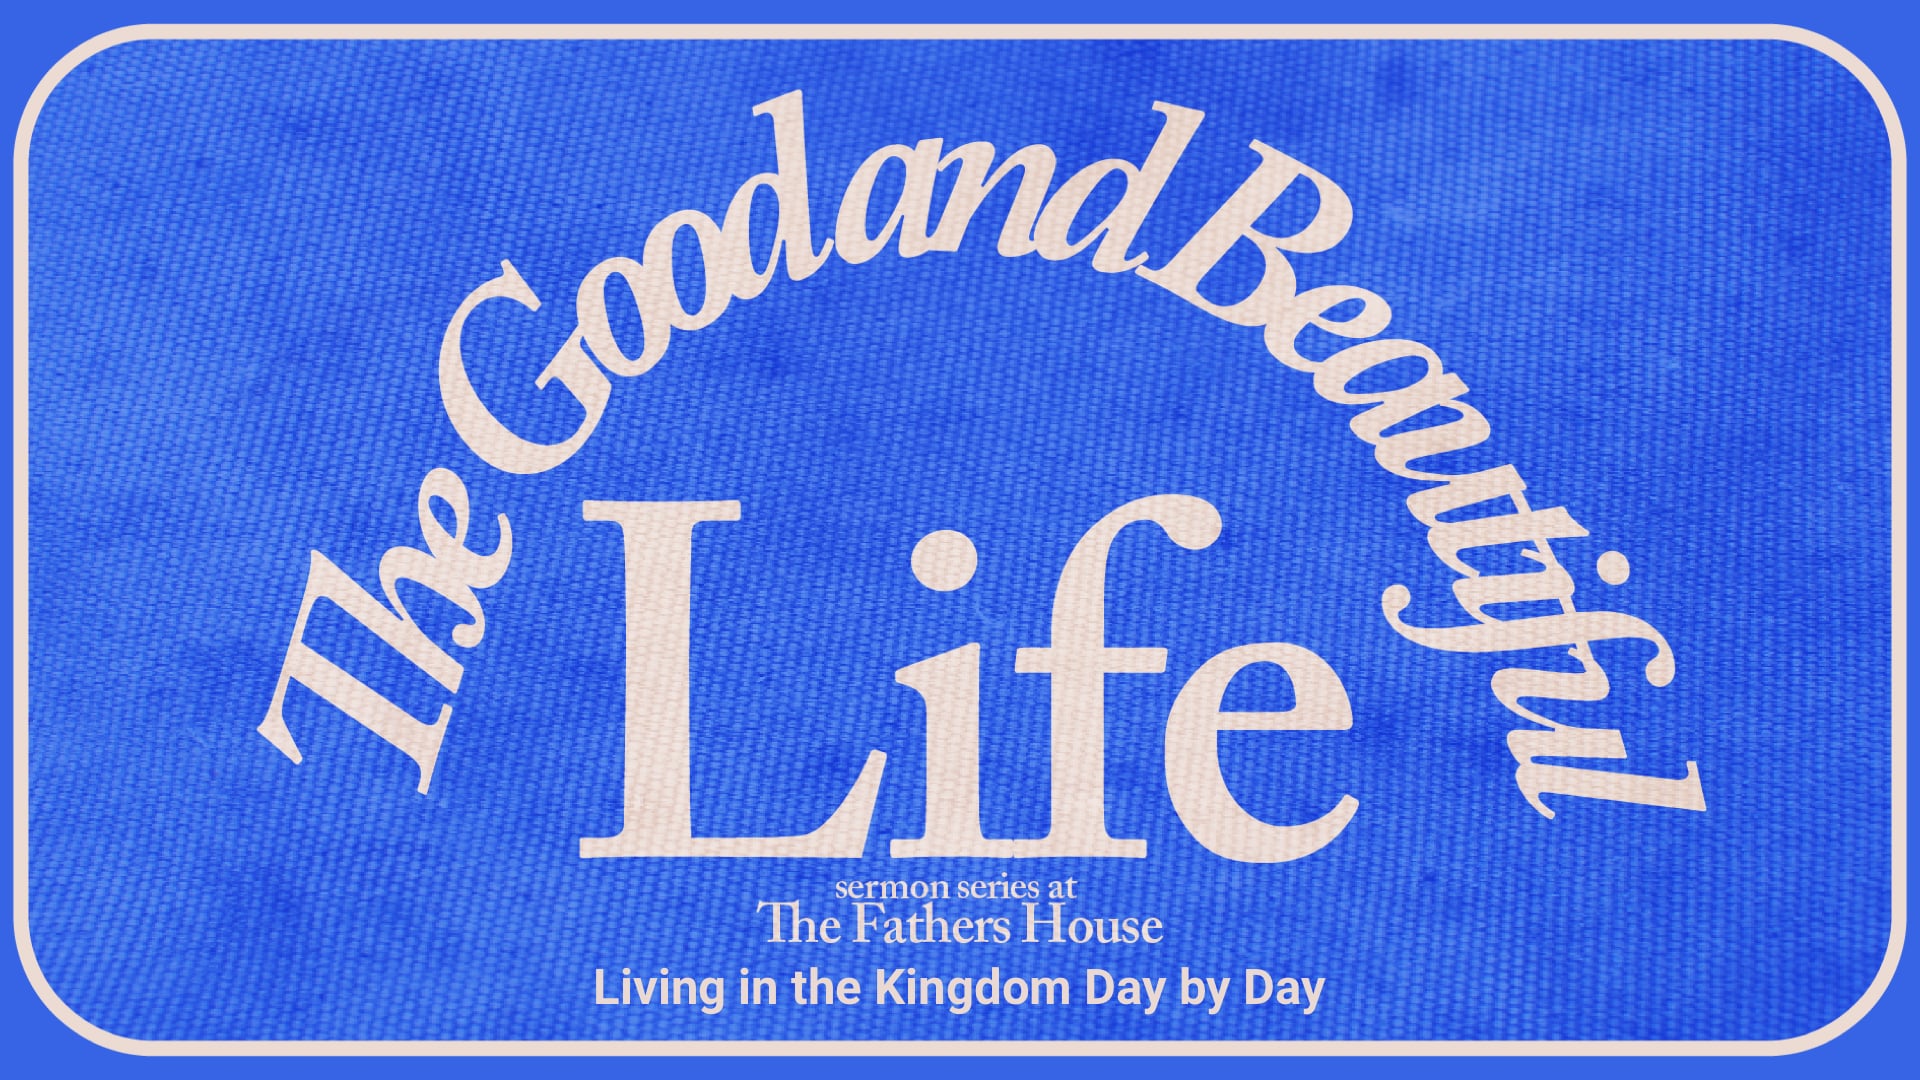 April 10, 2022 Living in the Kingdom Day by Day (Tyler Ferguson & Skylar Falardeau)